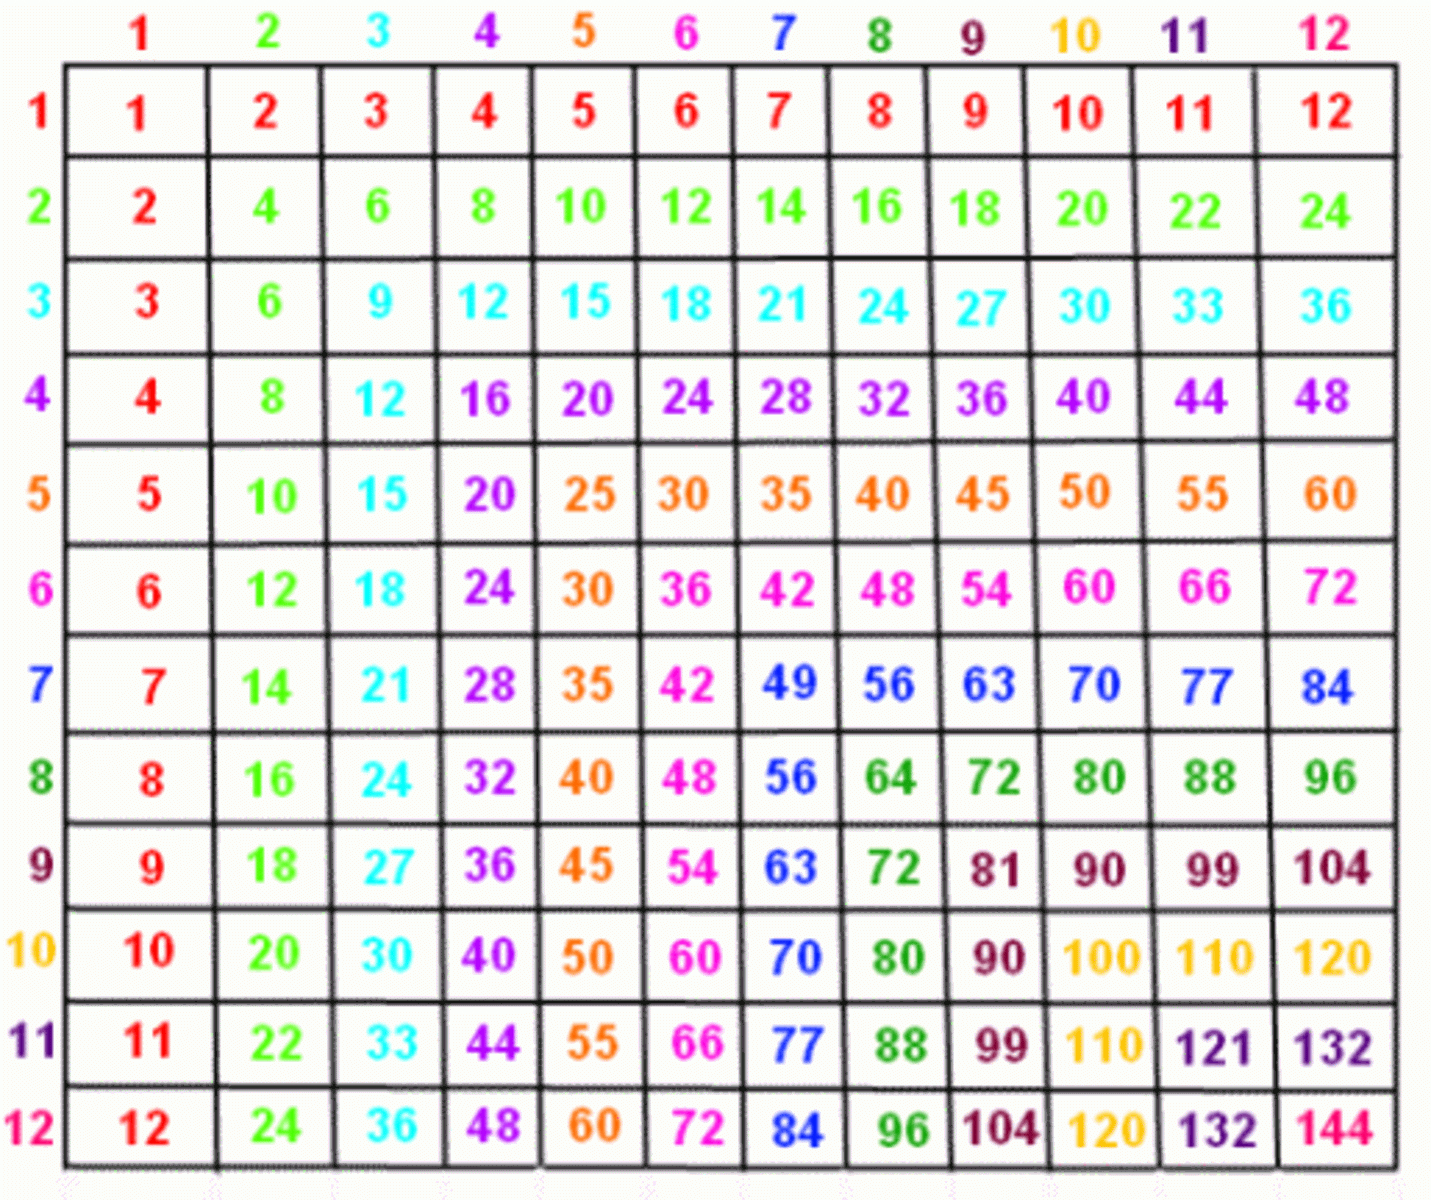 Multiplication Table Chart Printable 1 100 - Vatan.vtngcf pertaining to Printable Multiplication Table 1-12 Pdf